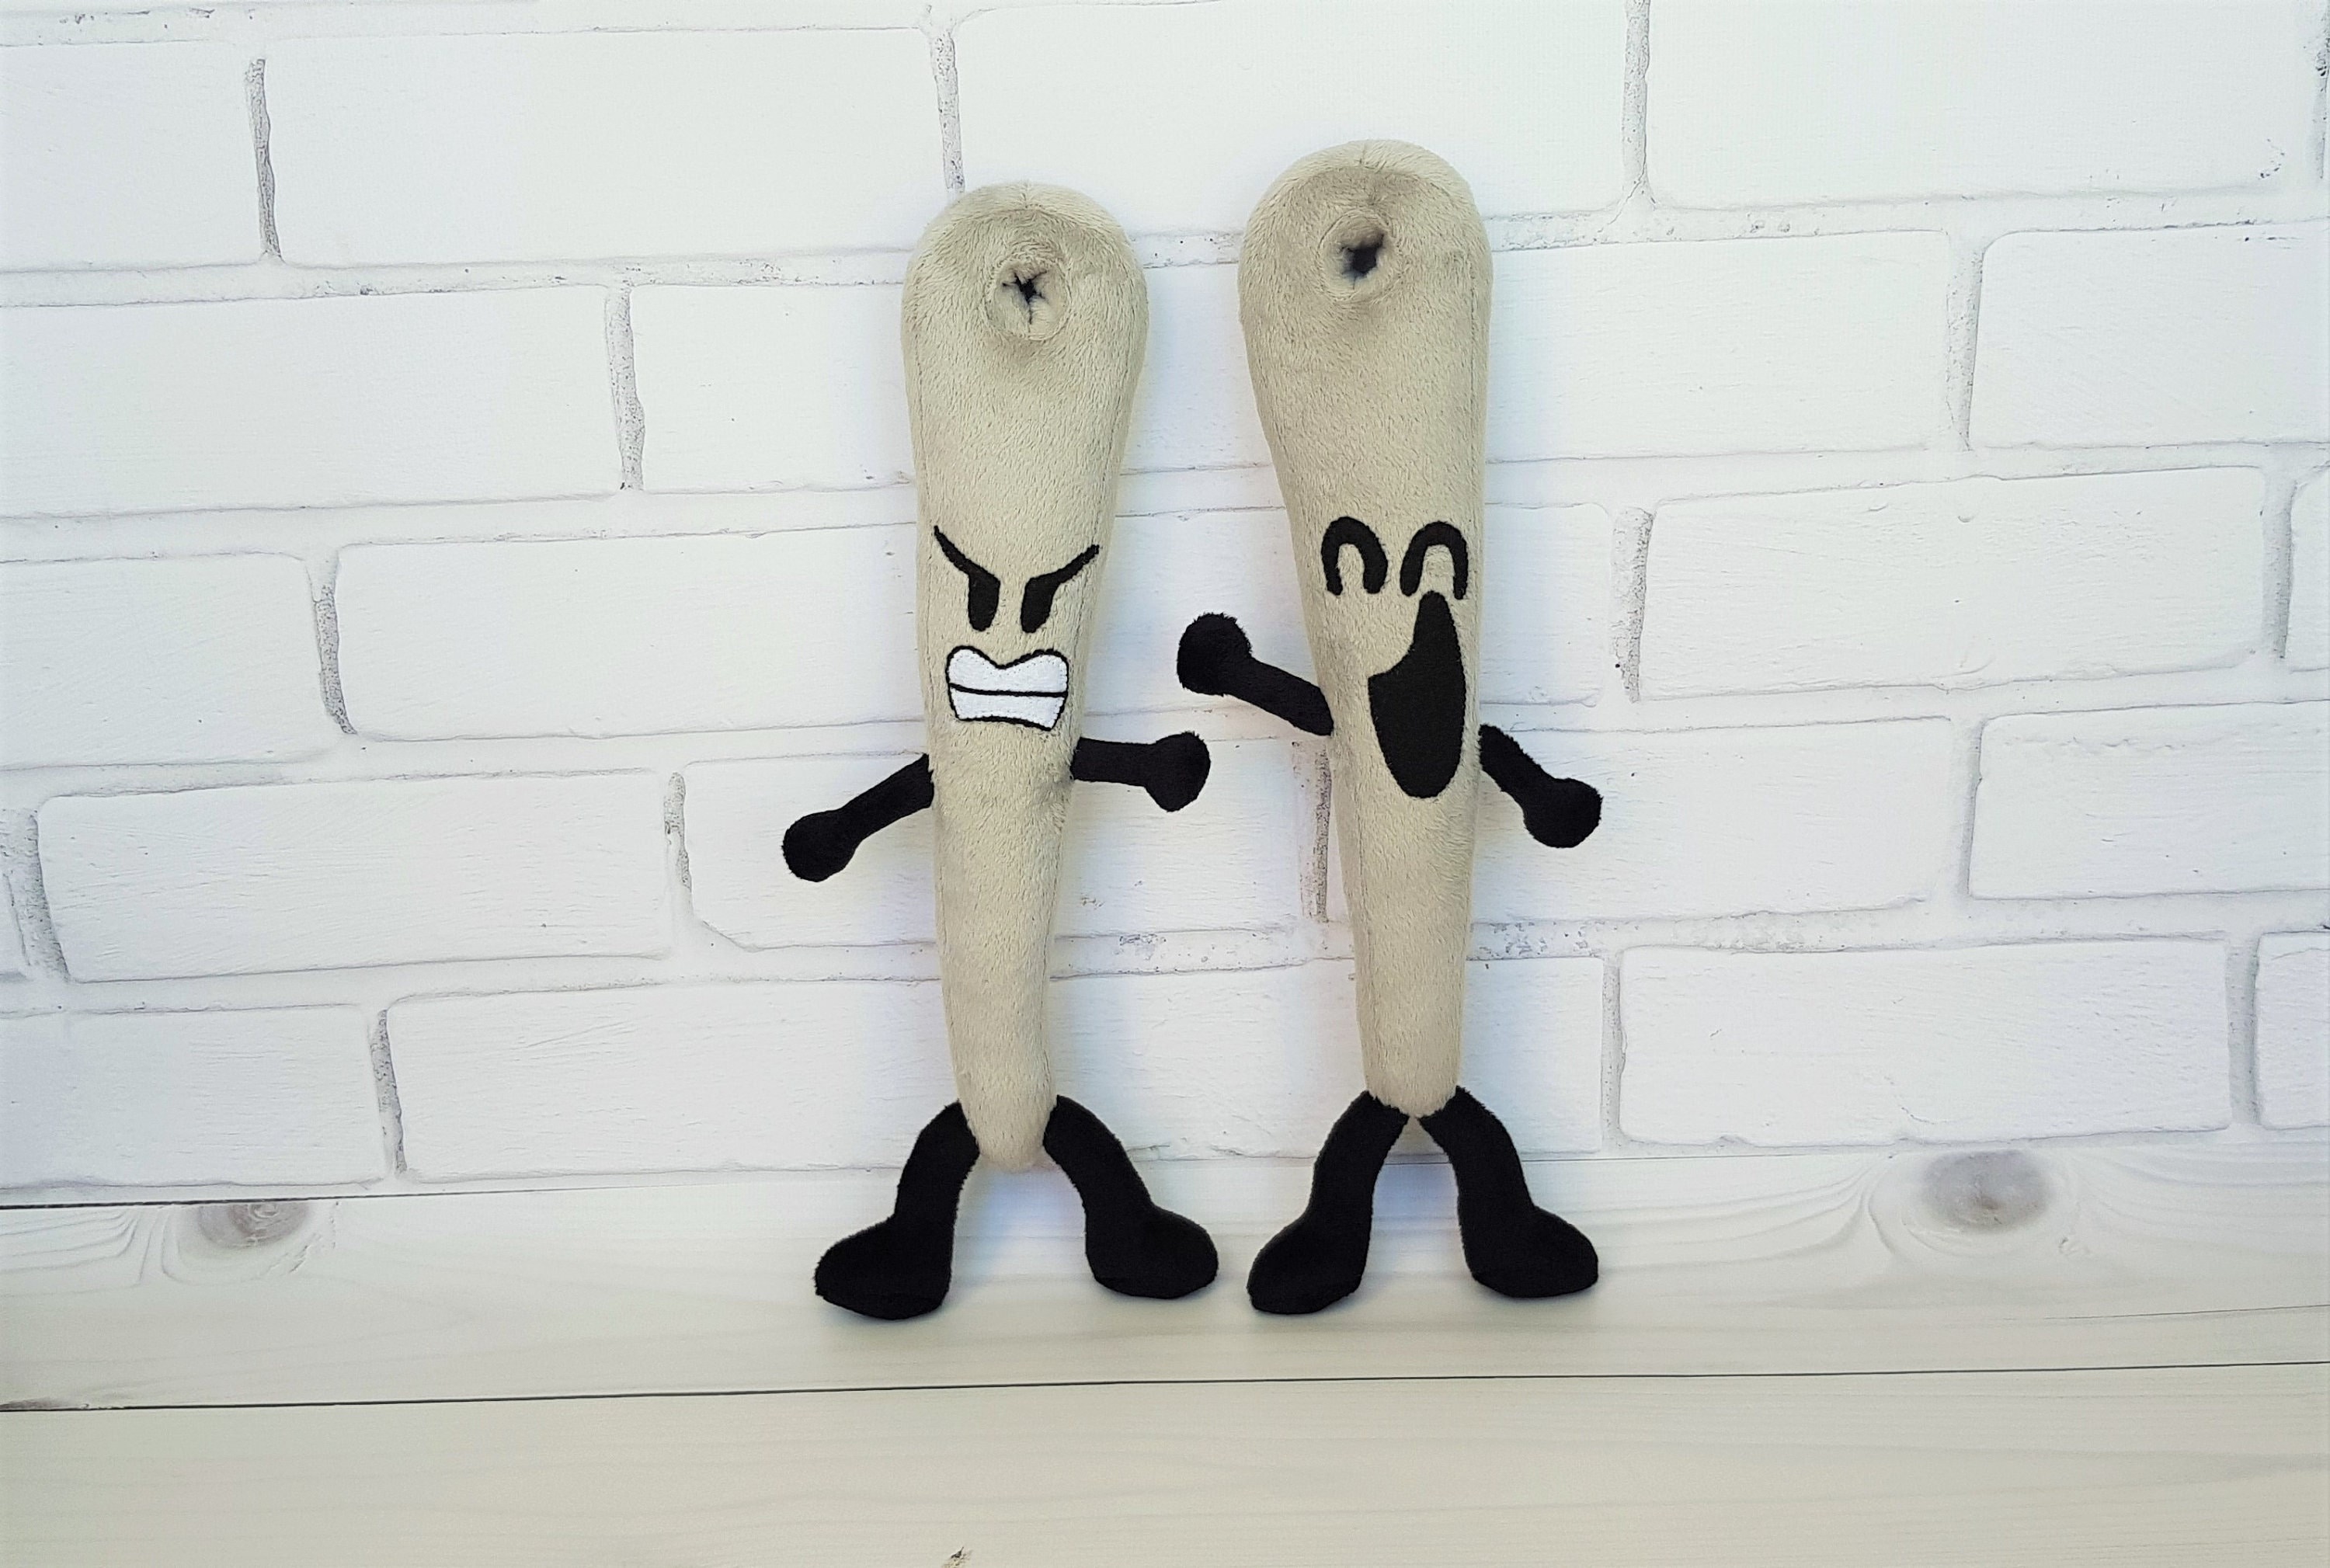 BFDI Battle for Dream Island Plush Figure Toy Stuffed Toys for Kids Cake